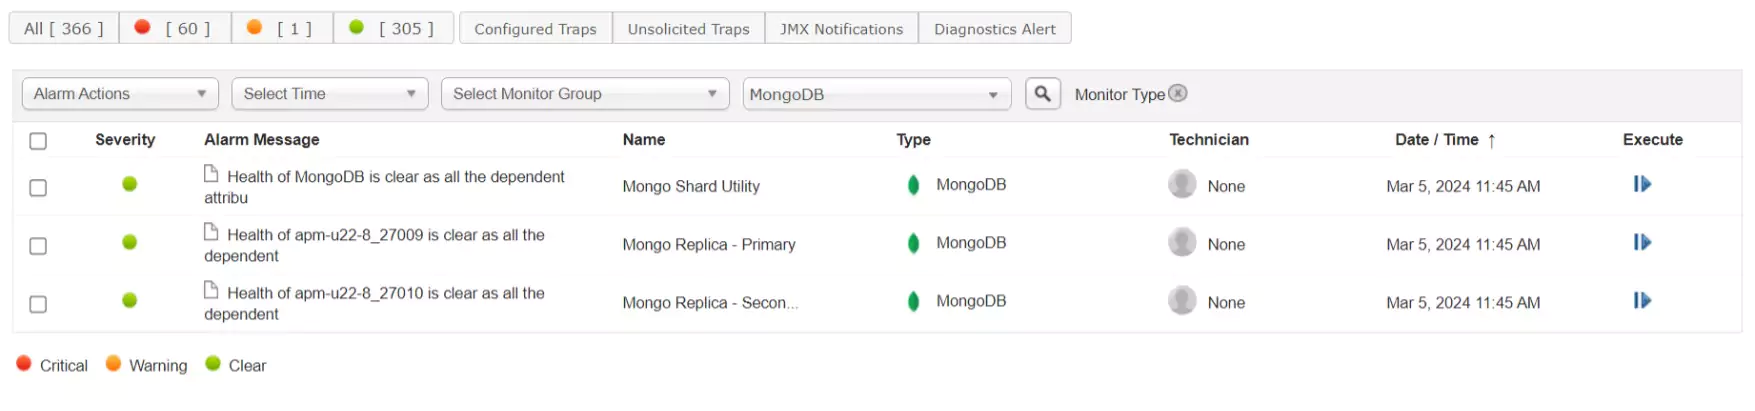 MongoDB Monitoring - ManageEngine Applications Manager